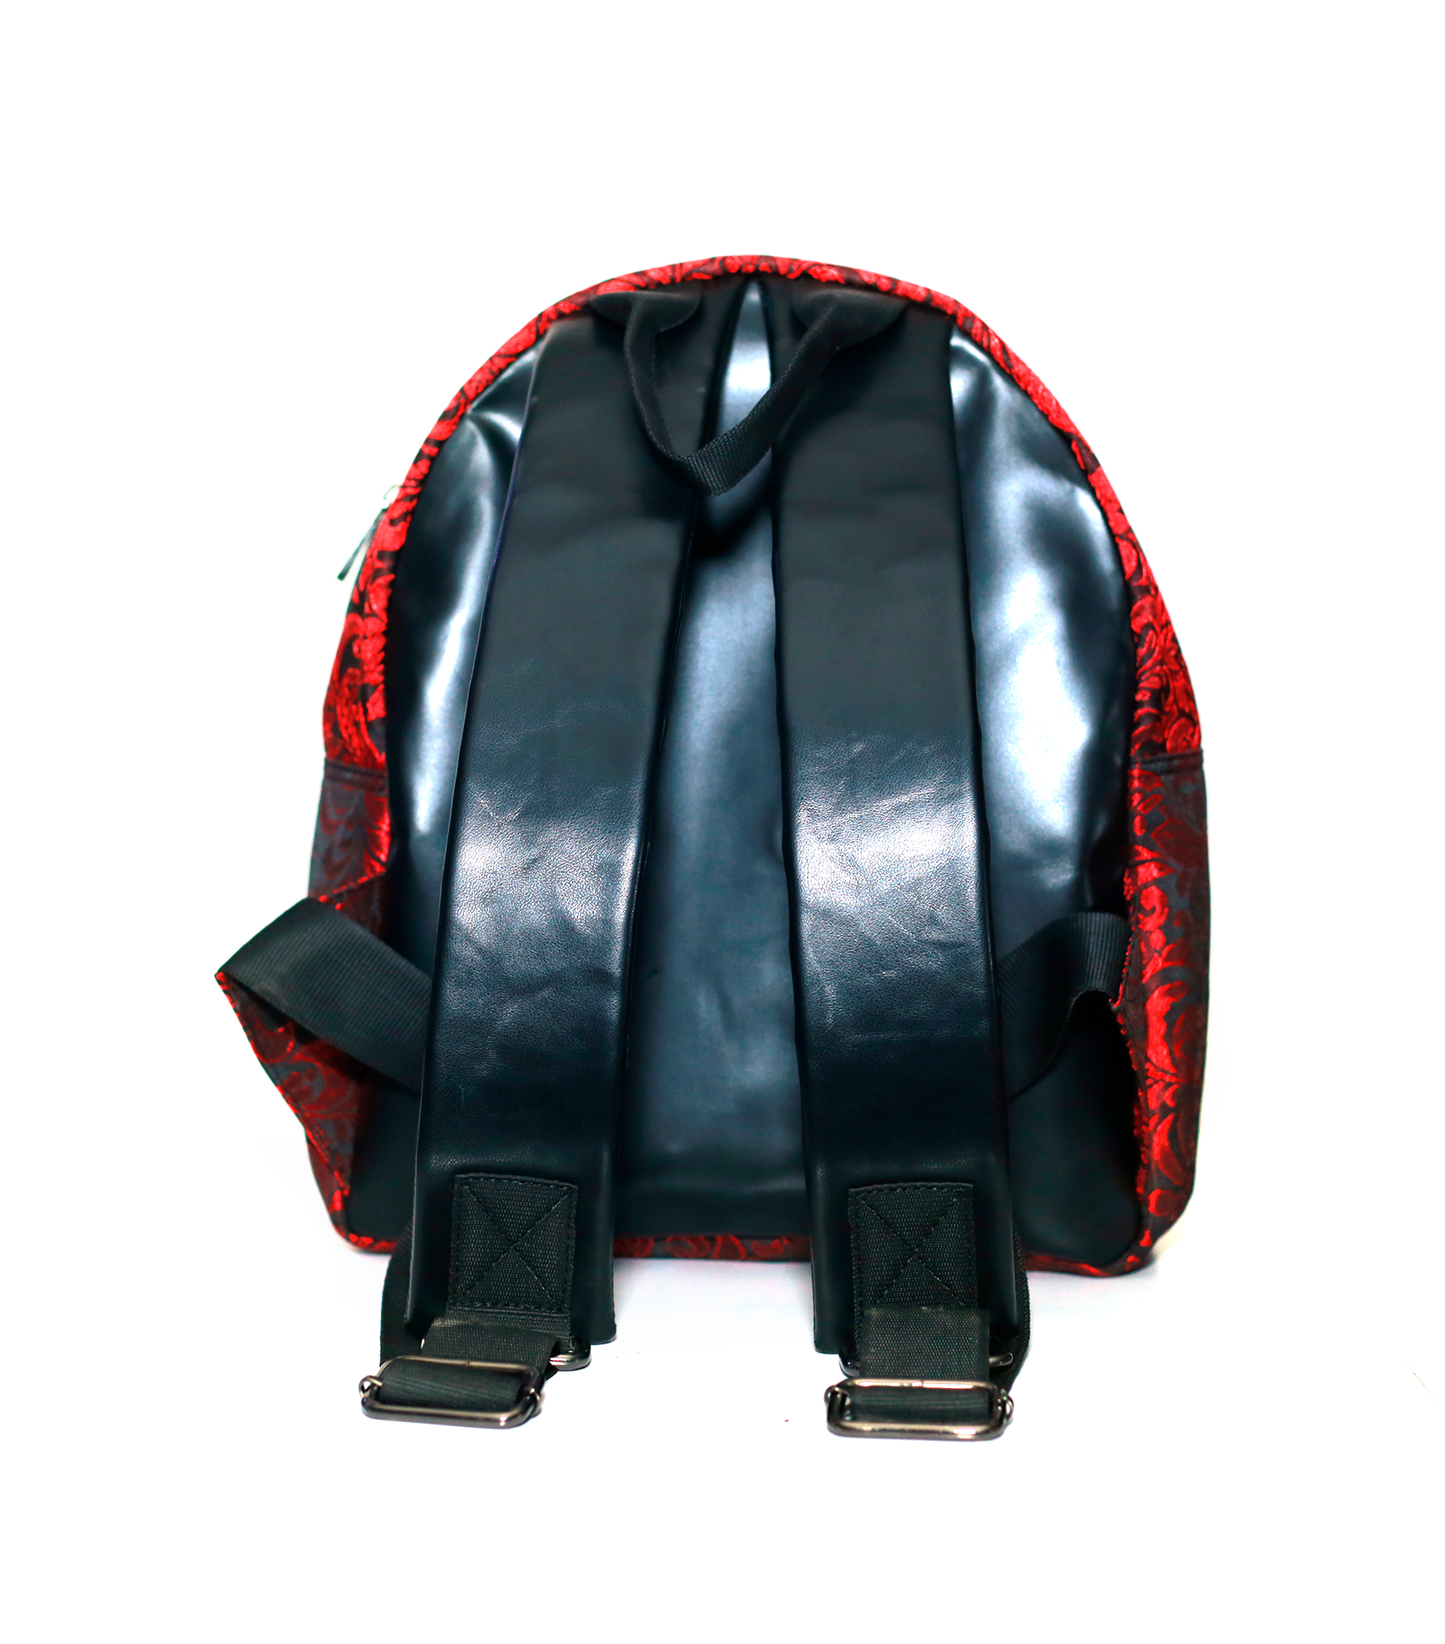 Gothic Noir Brocade Backpack